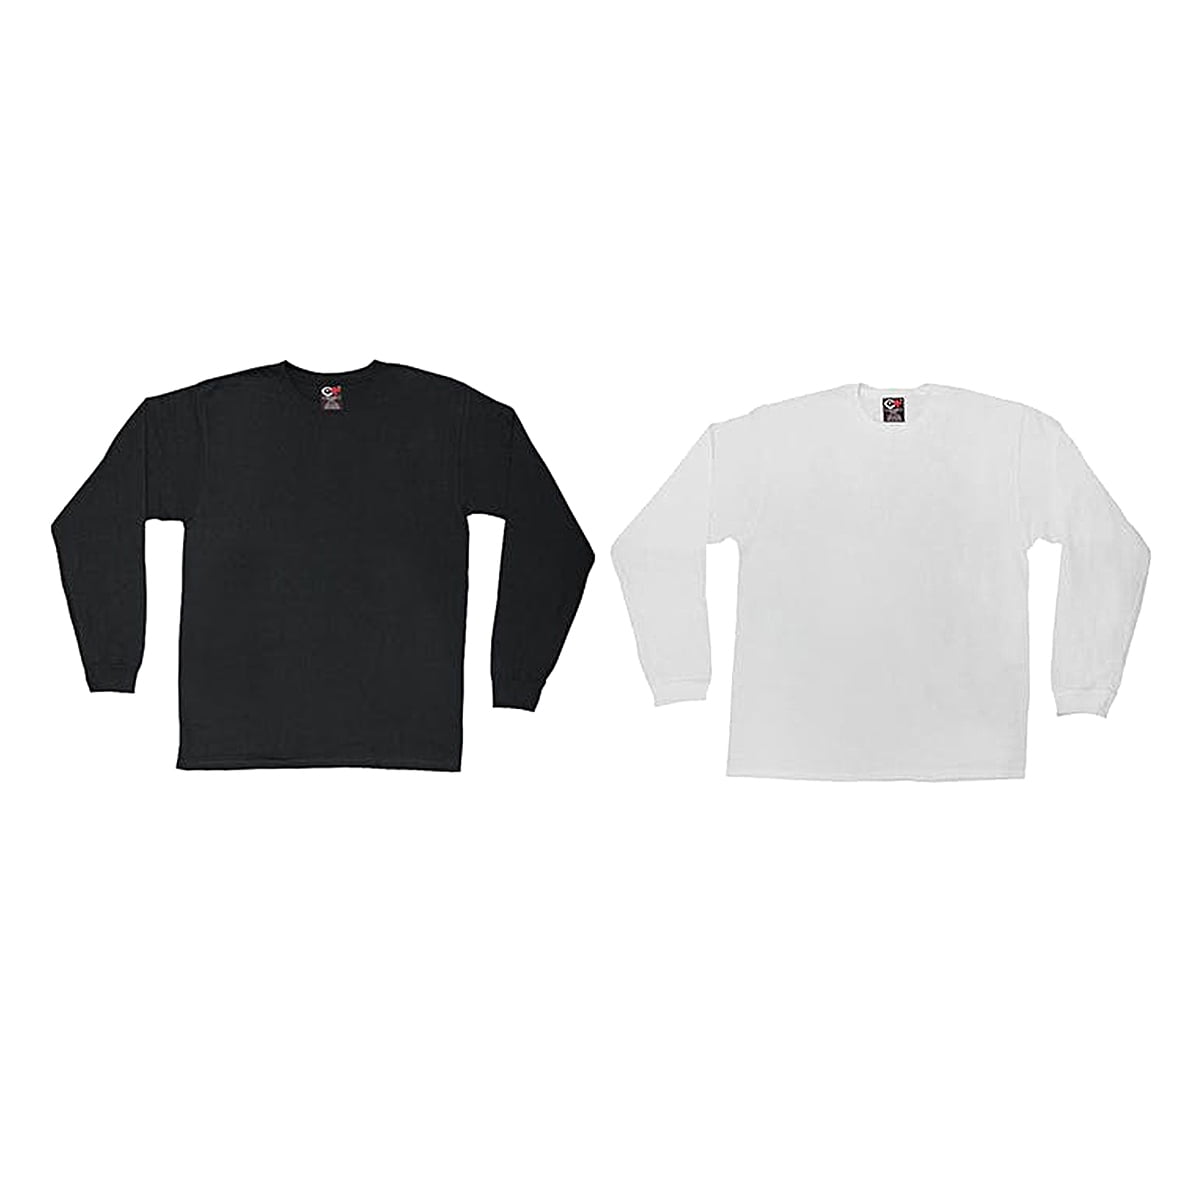 Details about   1-10 Pack Mens Plain Cotton Heavy Weight Premium Tee T-Shirt Shirt Top S-3XL Lot 